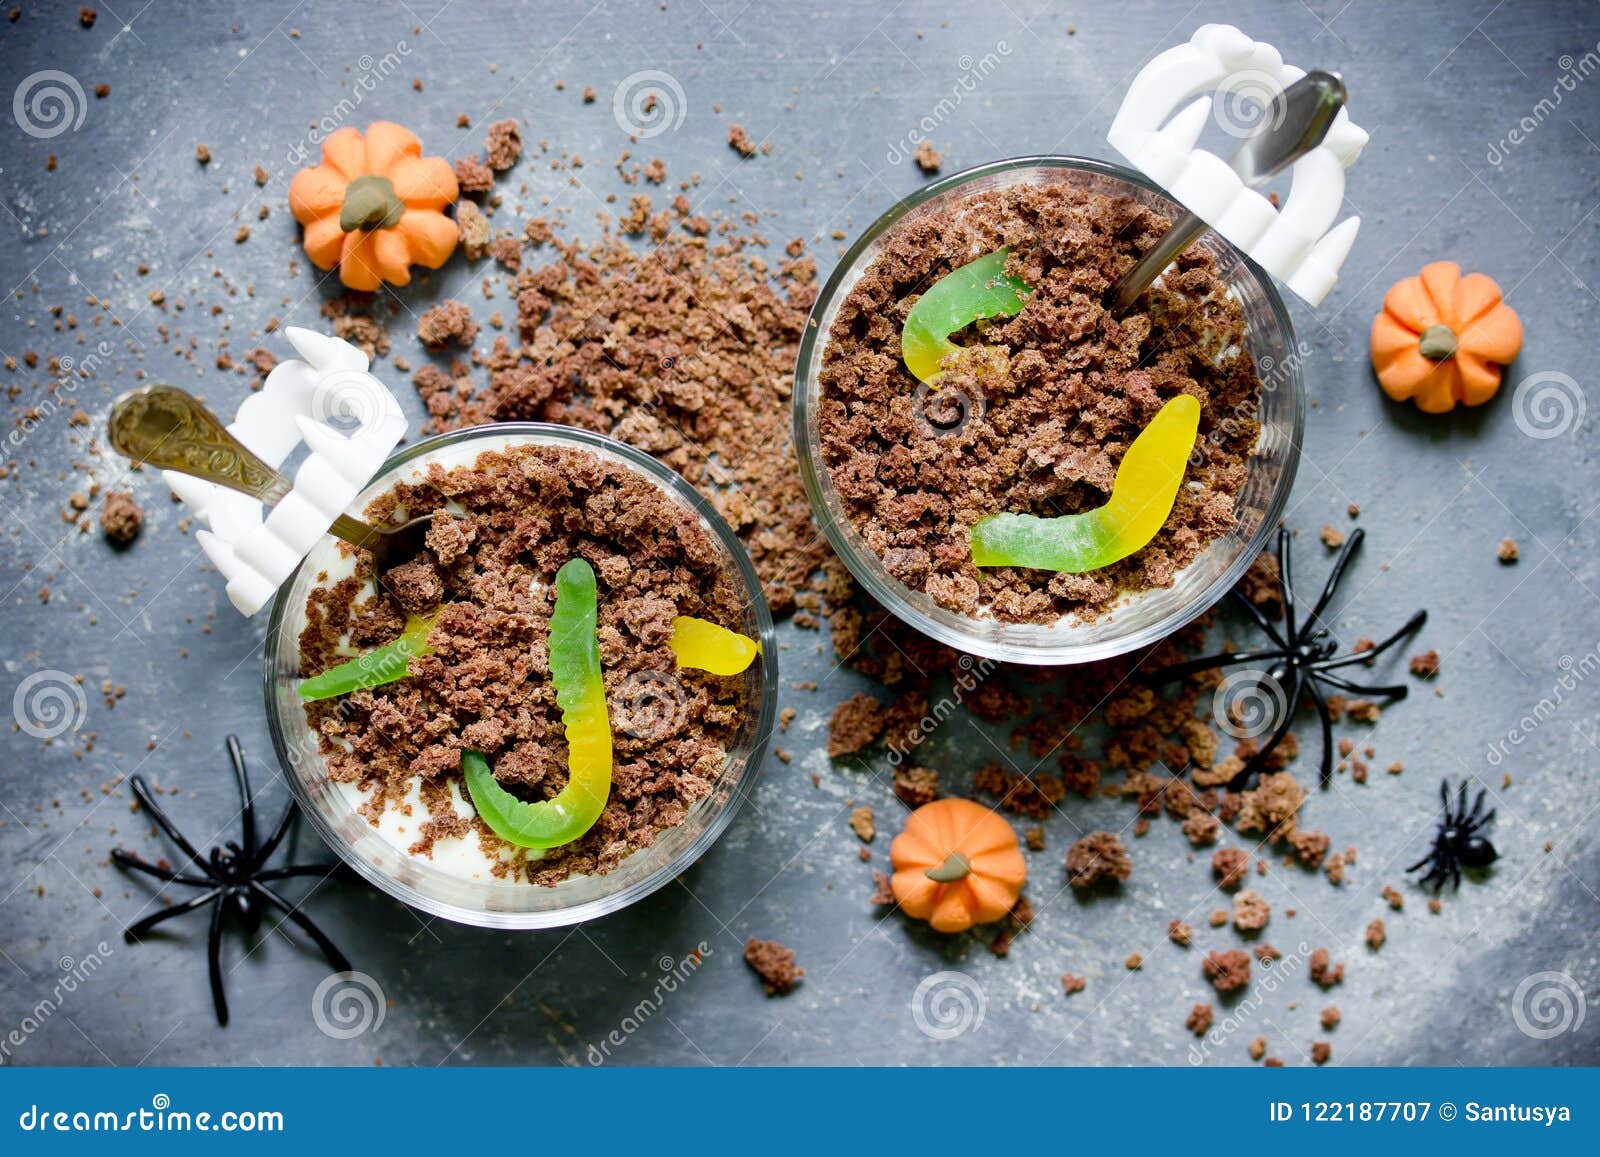 Halloween Worms And Dirt Dessert Stock Image Image Of Gourmet